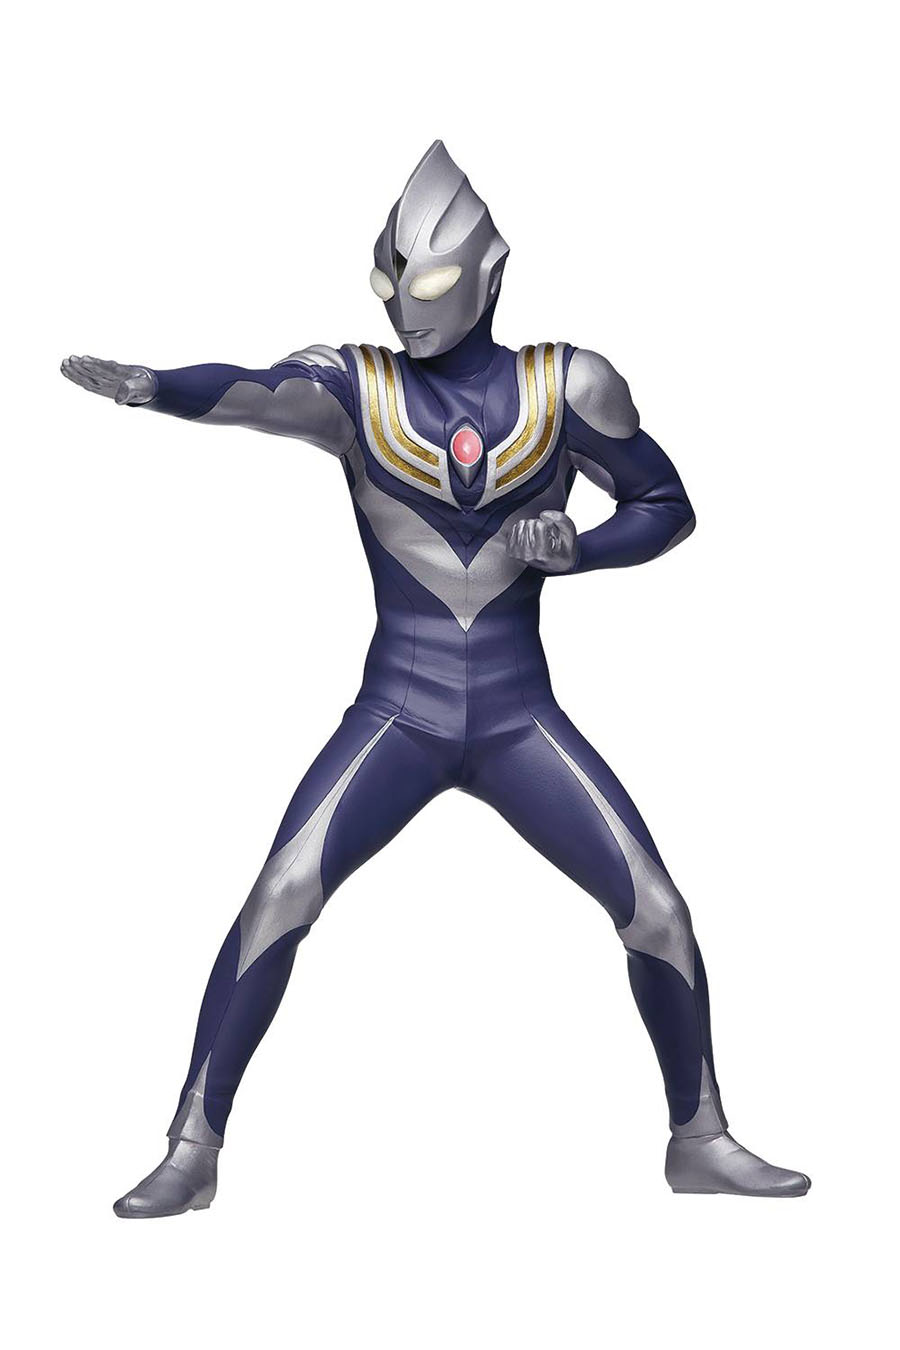 Ultraman Tiga Heros Brave Statue Figure - Ultraman Tiga (Sky Type) Night Color Edition